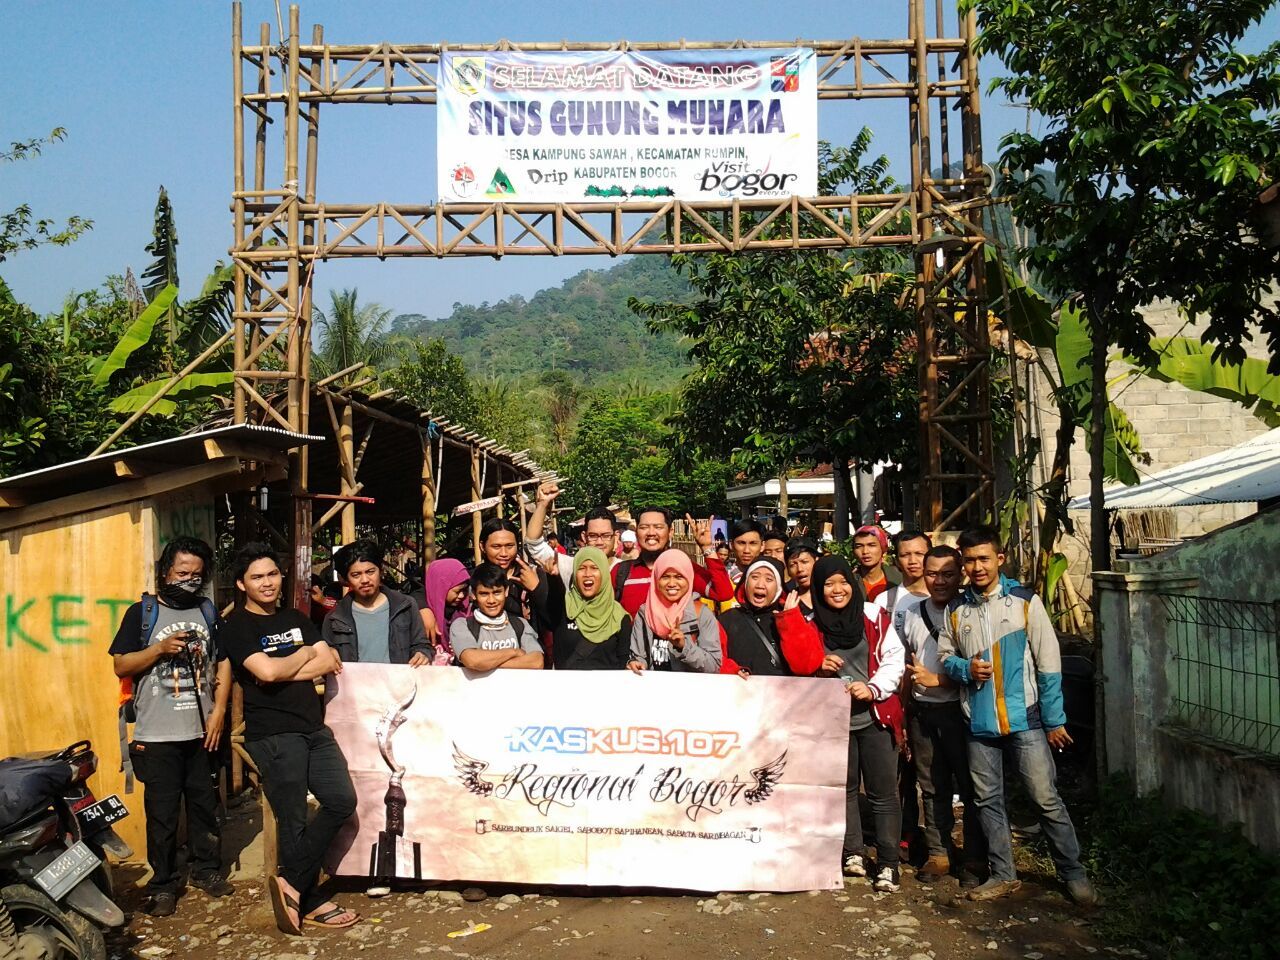 &#91;FR&#93; Track KASKUS Regional Bogor to Situs Gunung Munara - 10 Mei 2015